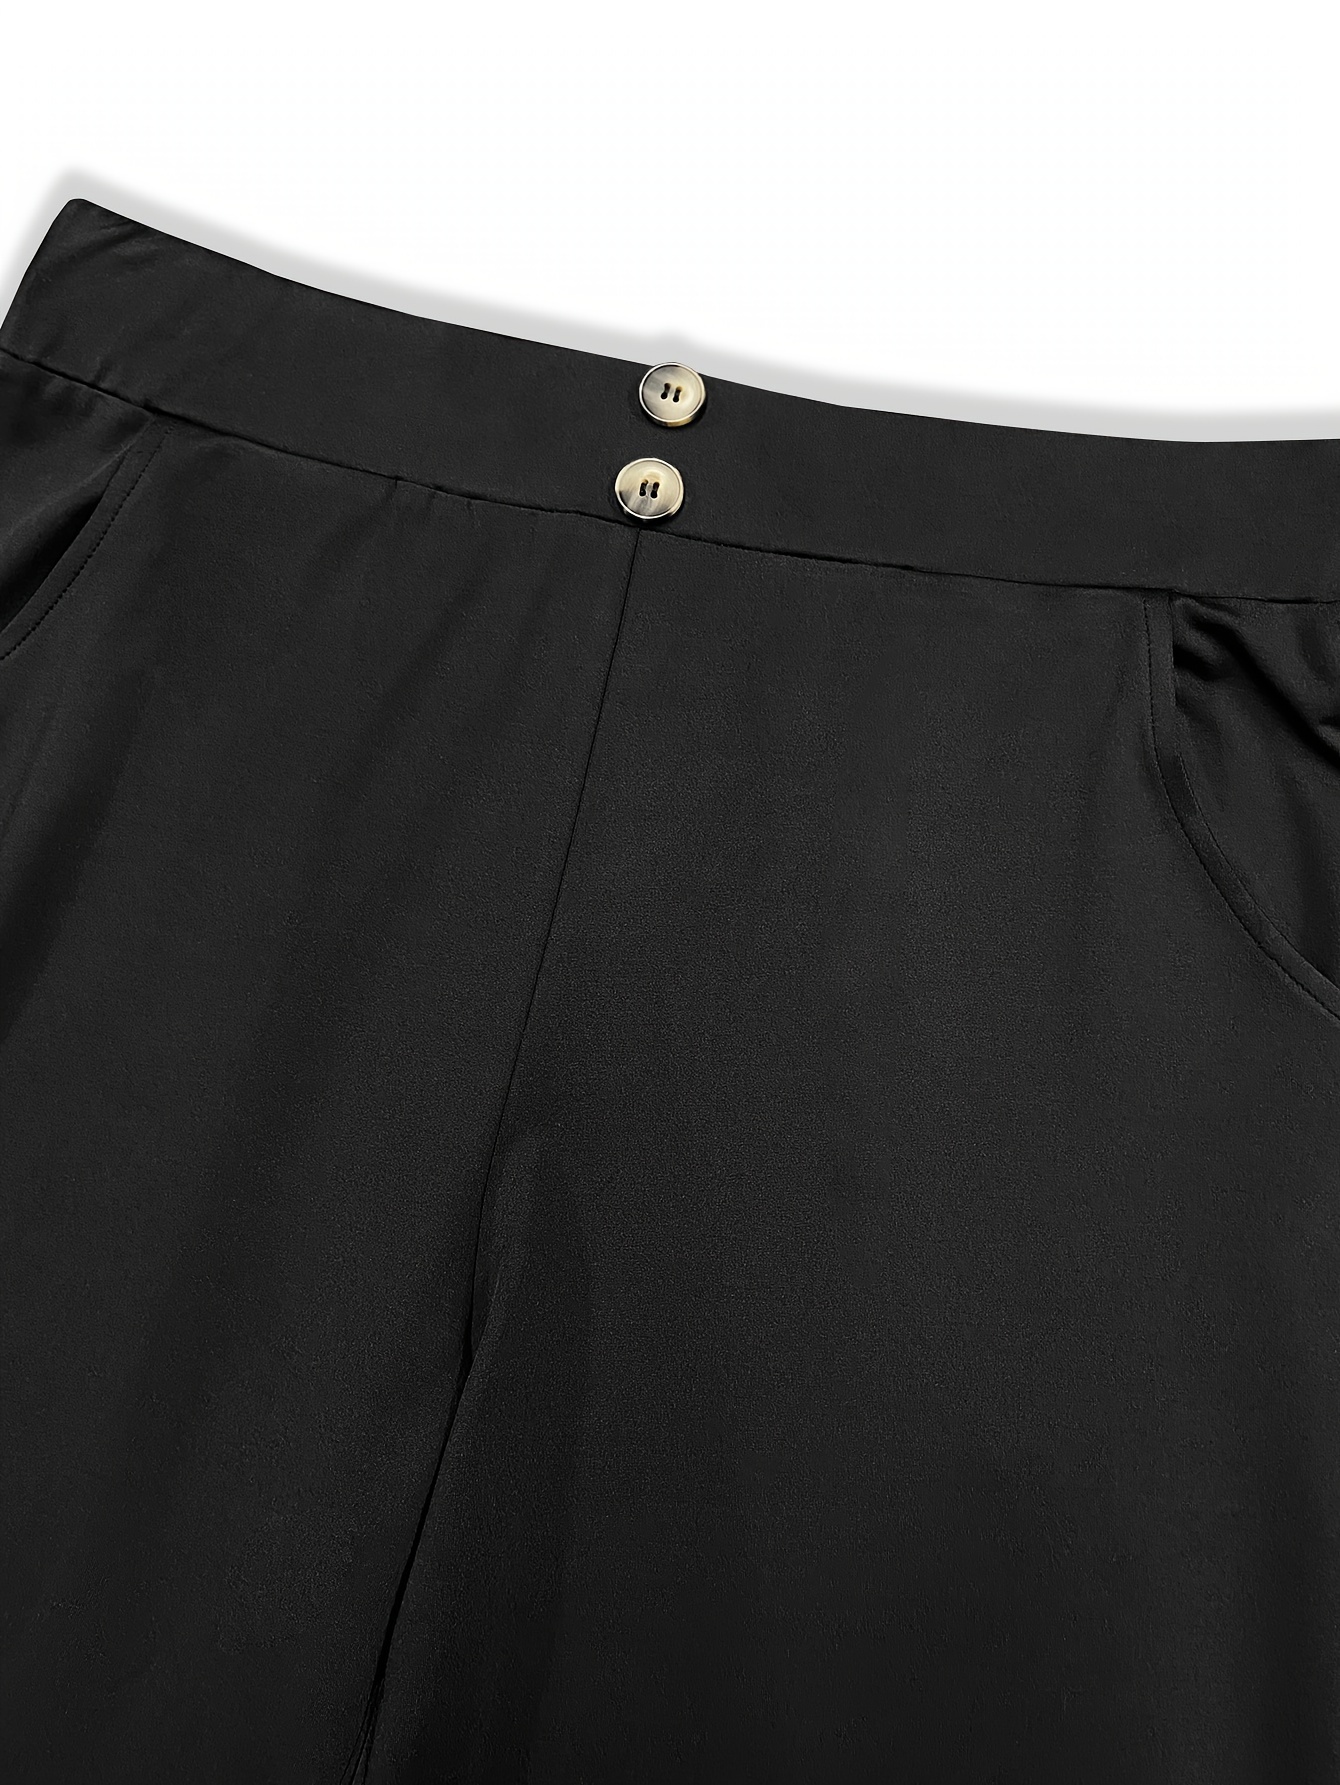 Buy High Waist Pants For Woman Plus Size 5 Button online